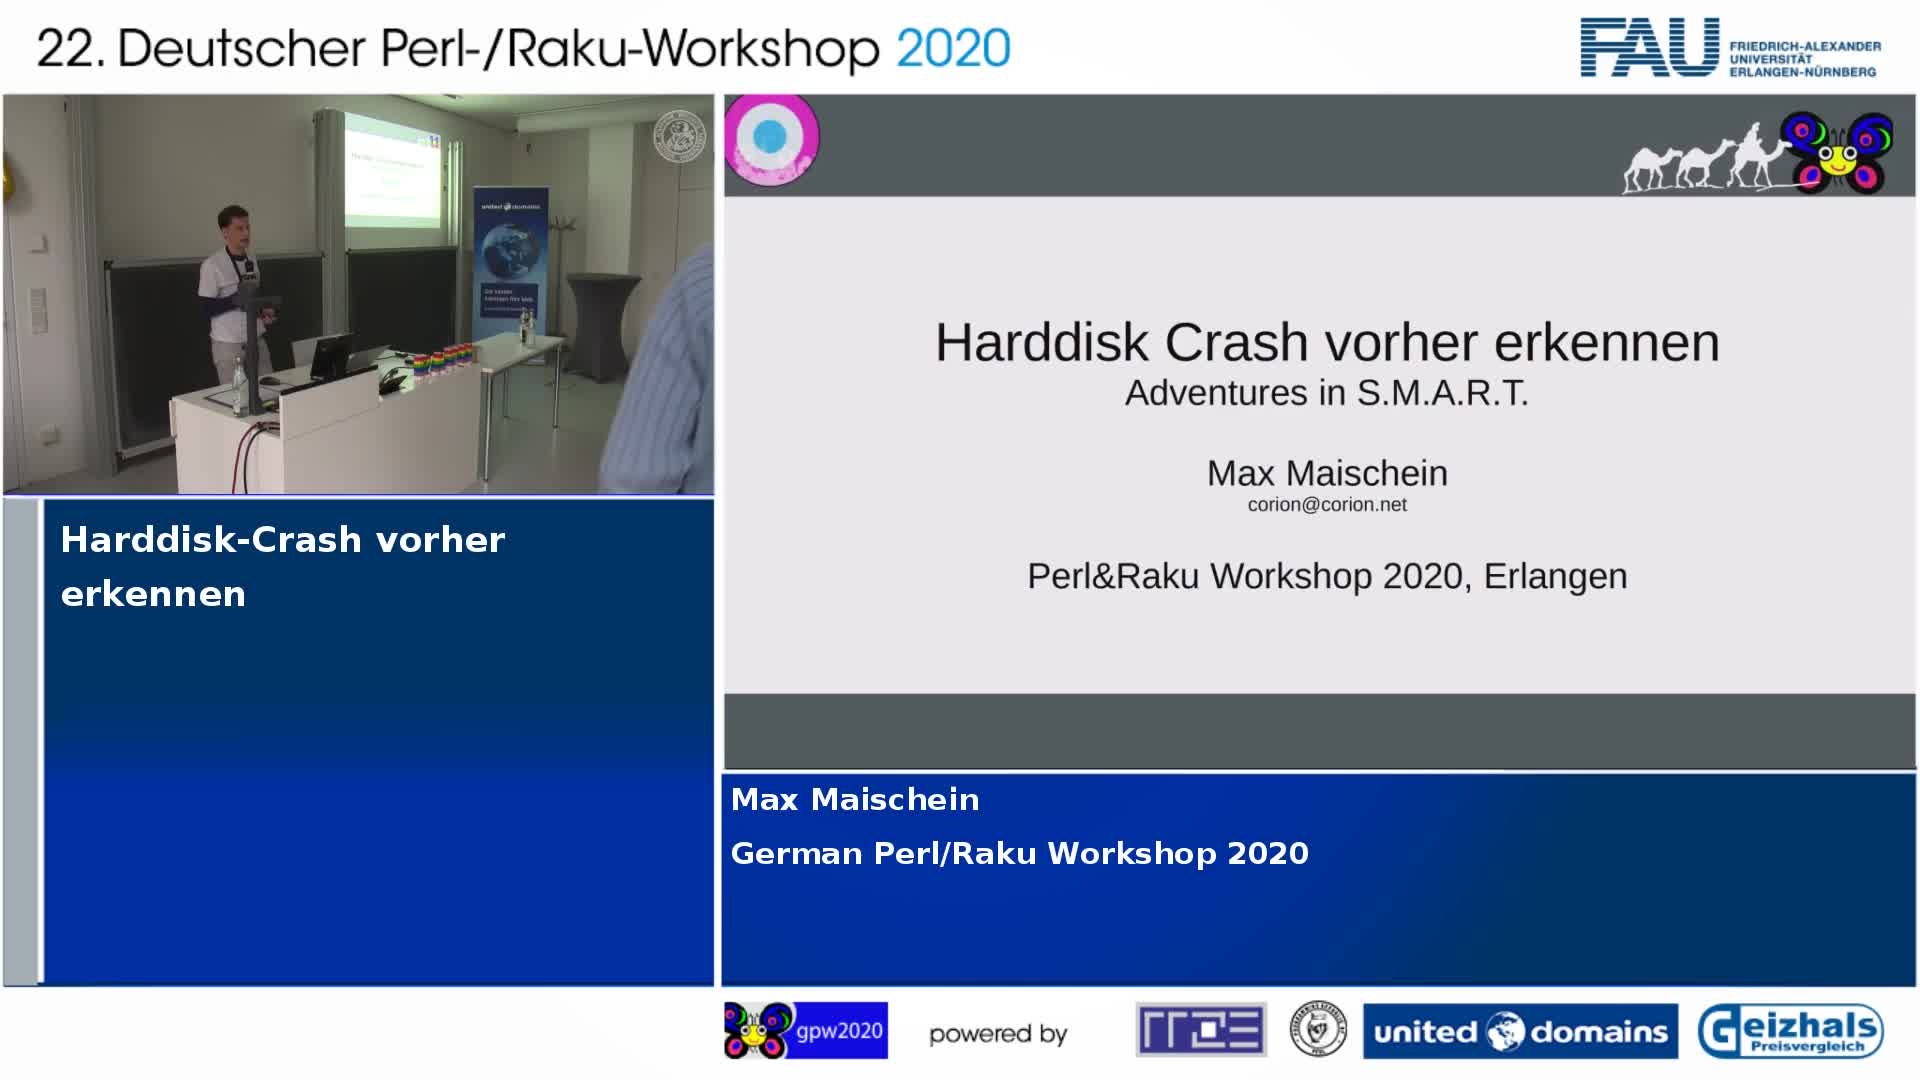 Harddisk-Crash vorher erkennen preview image